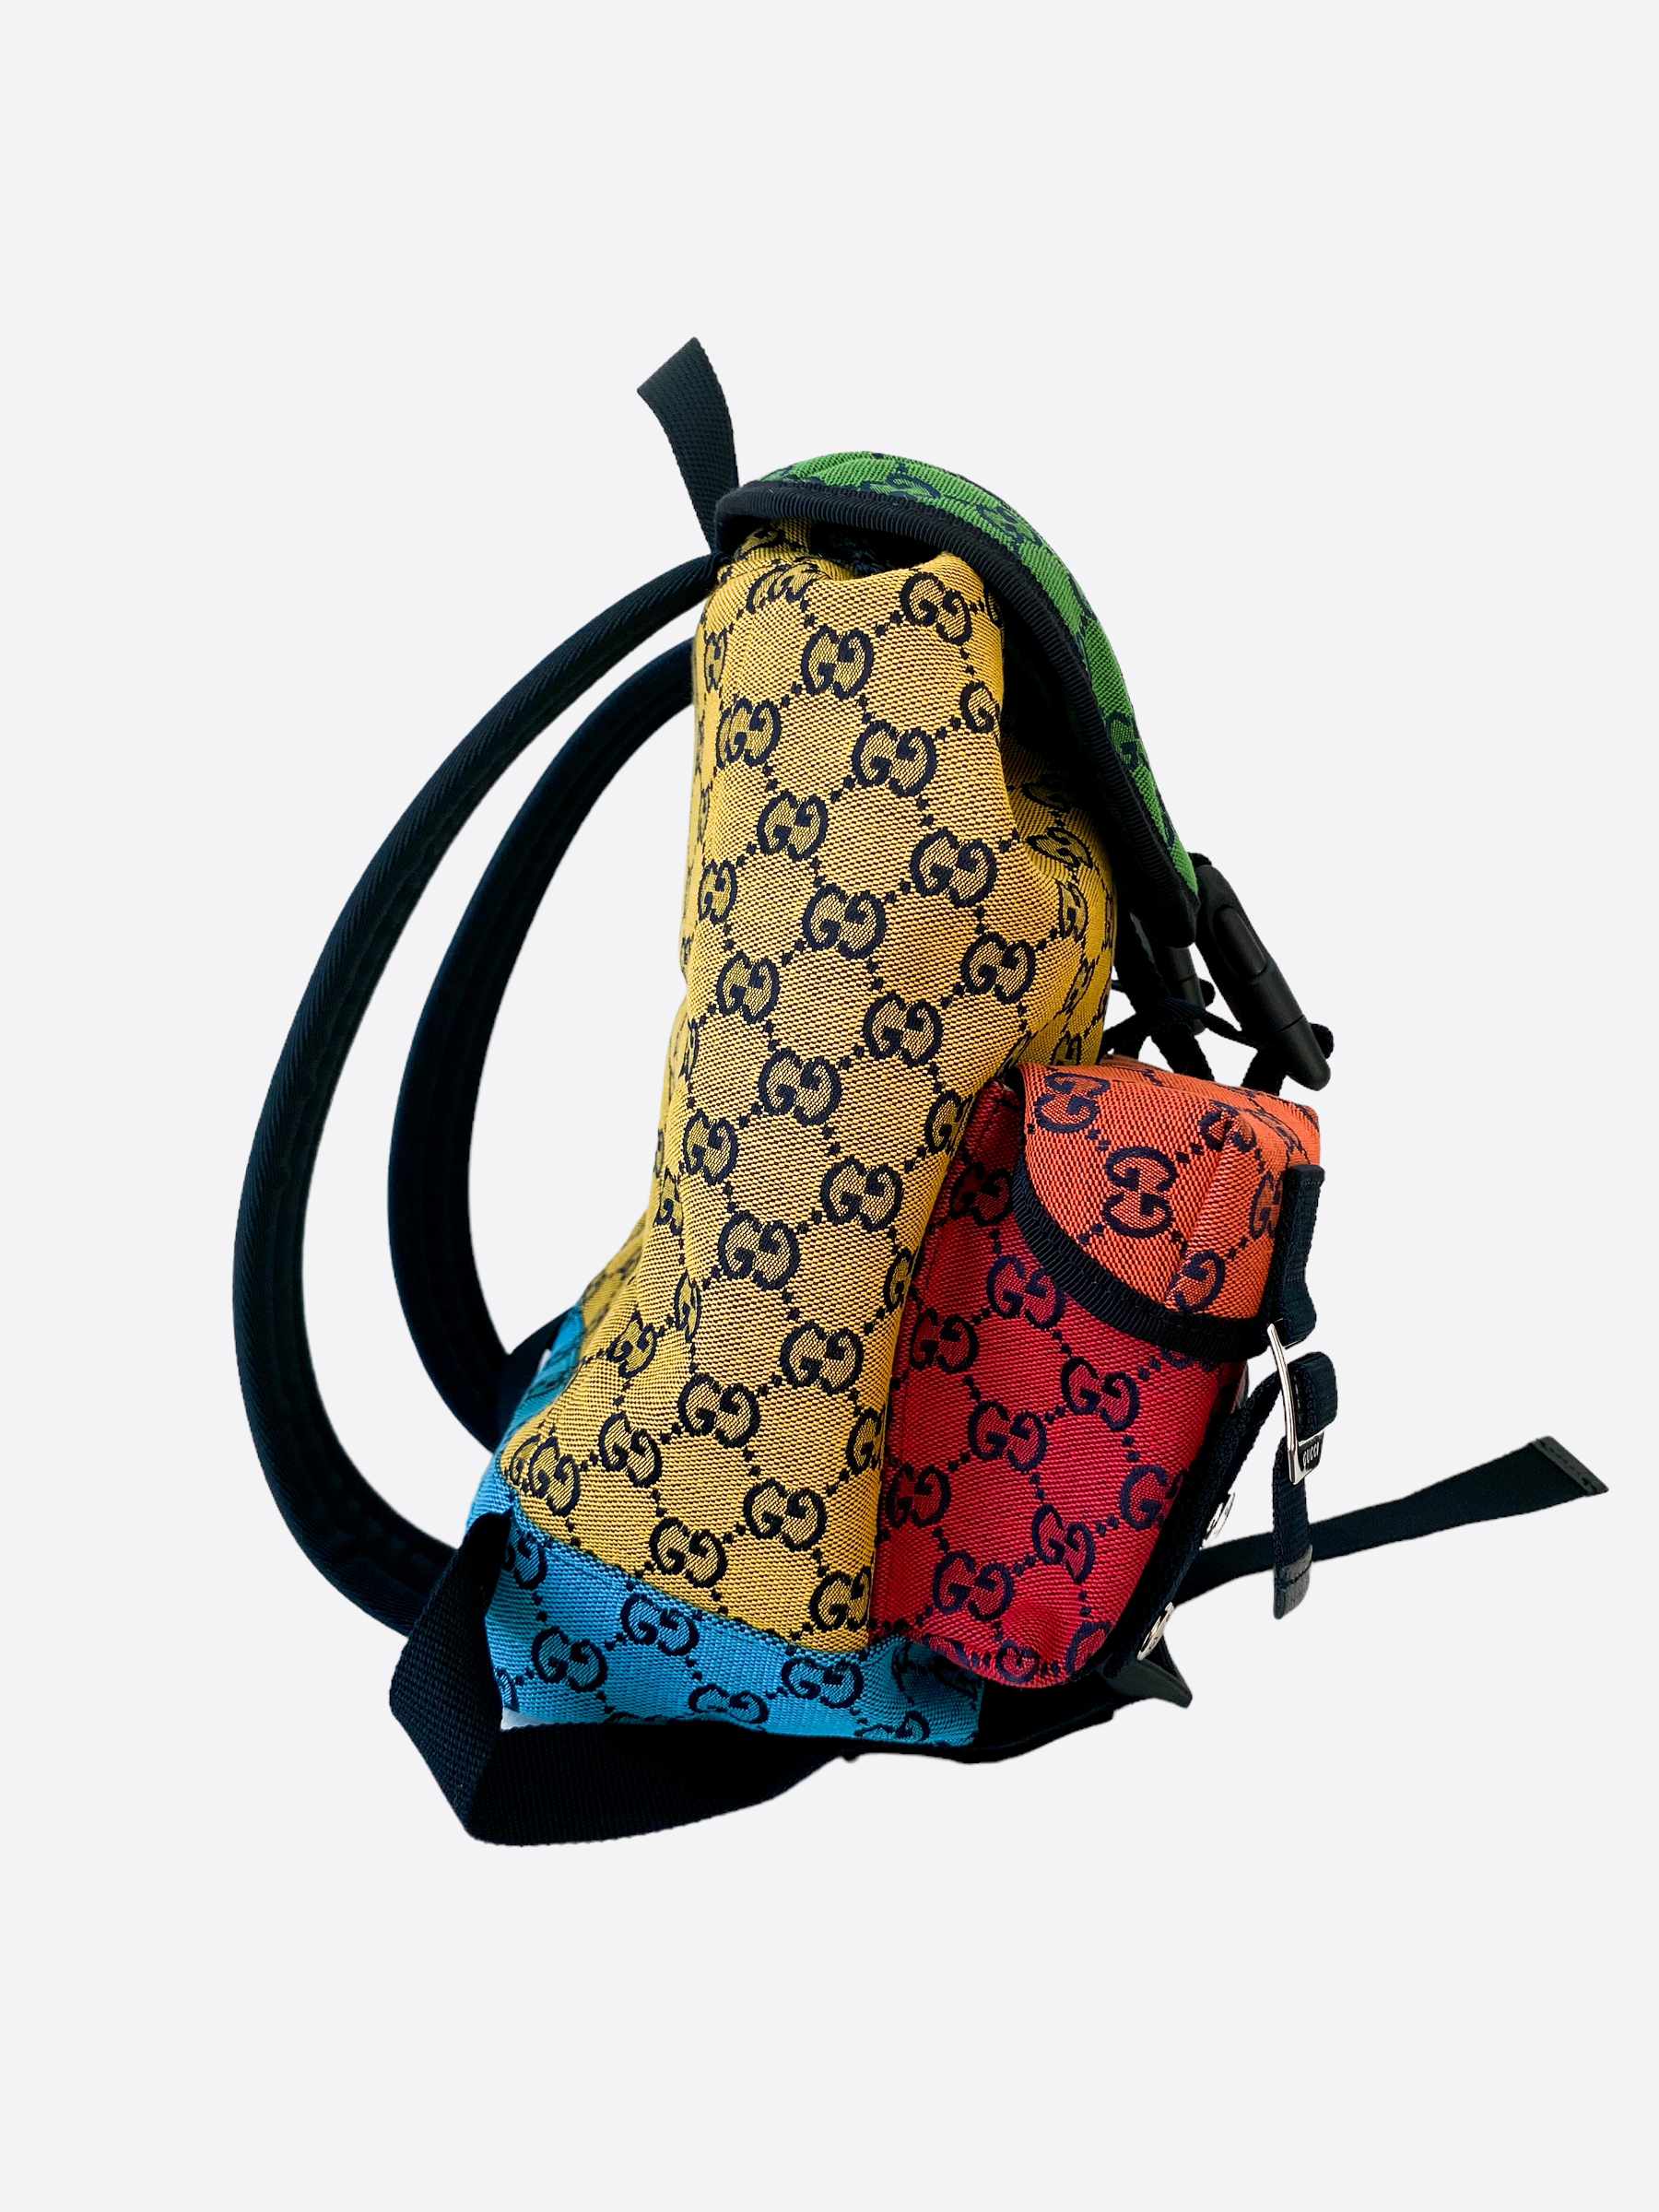 Brown Gucci GG Canvas Backpack – Designer Revival